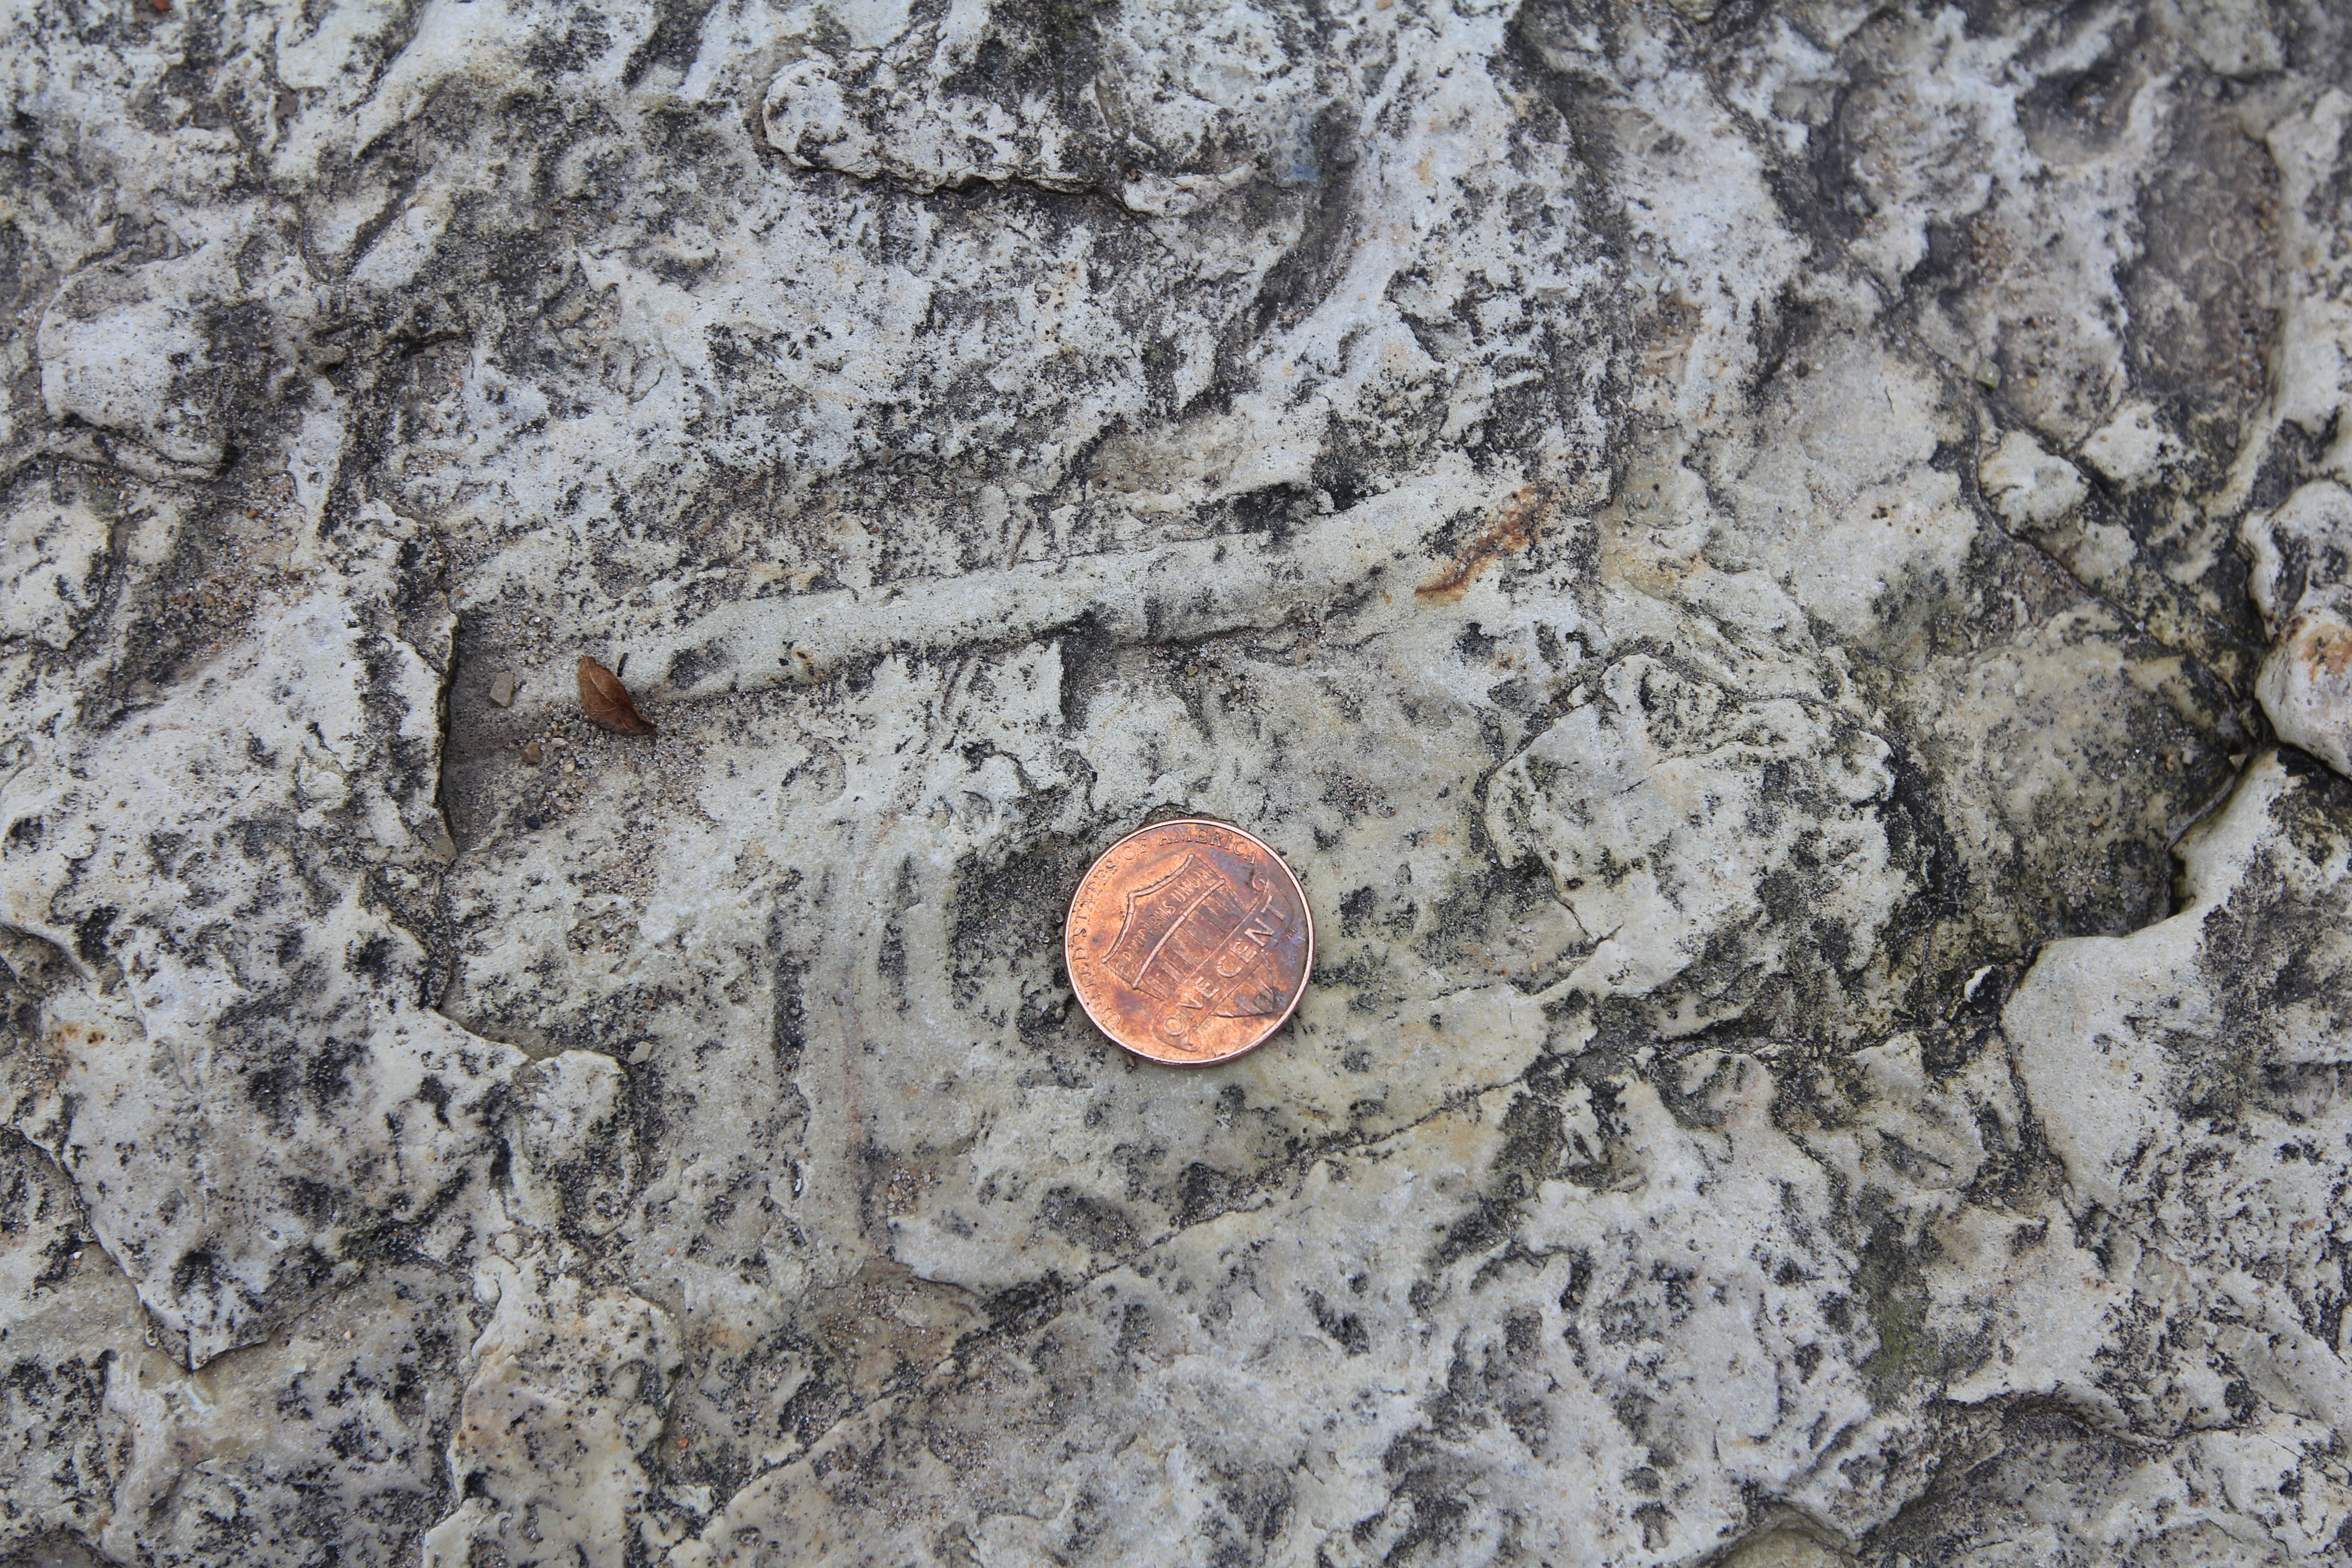 Silurian trace fossil at Hawley Road & Menomonee River interreef deposit, Racine Formation.